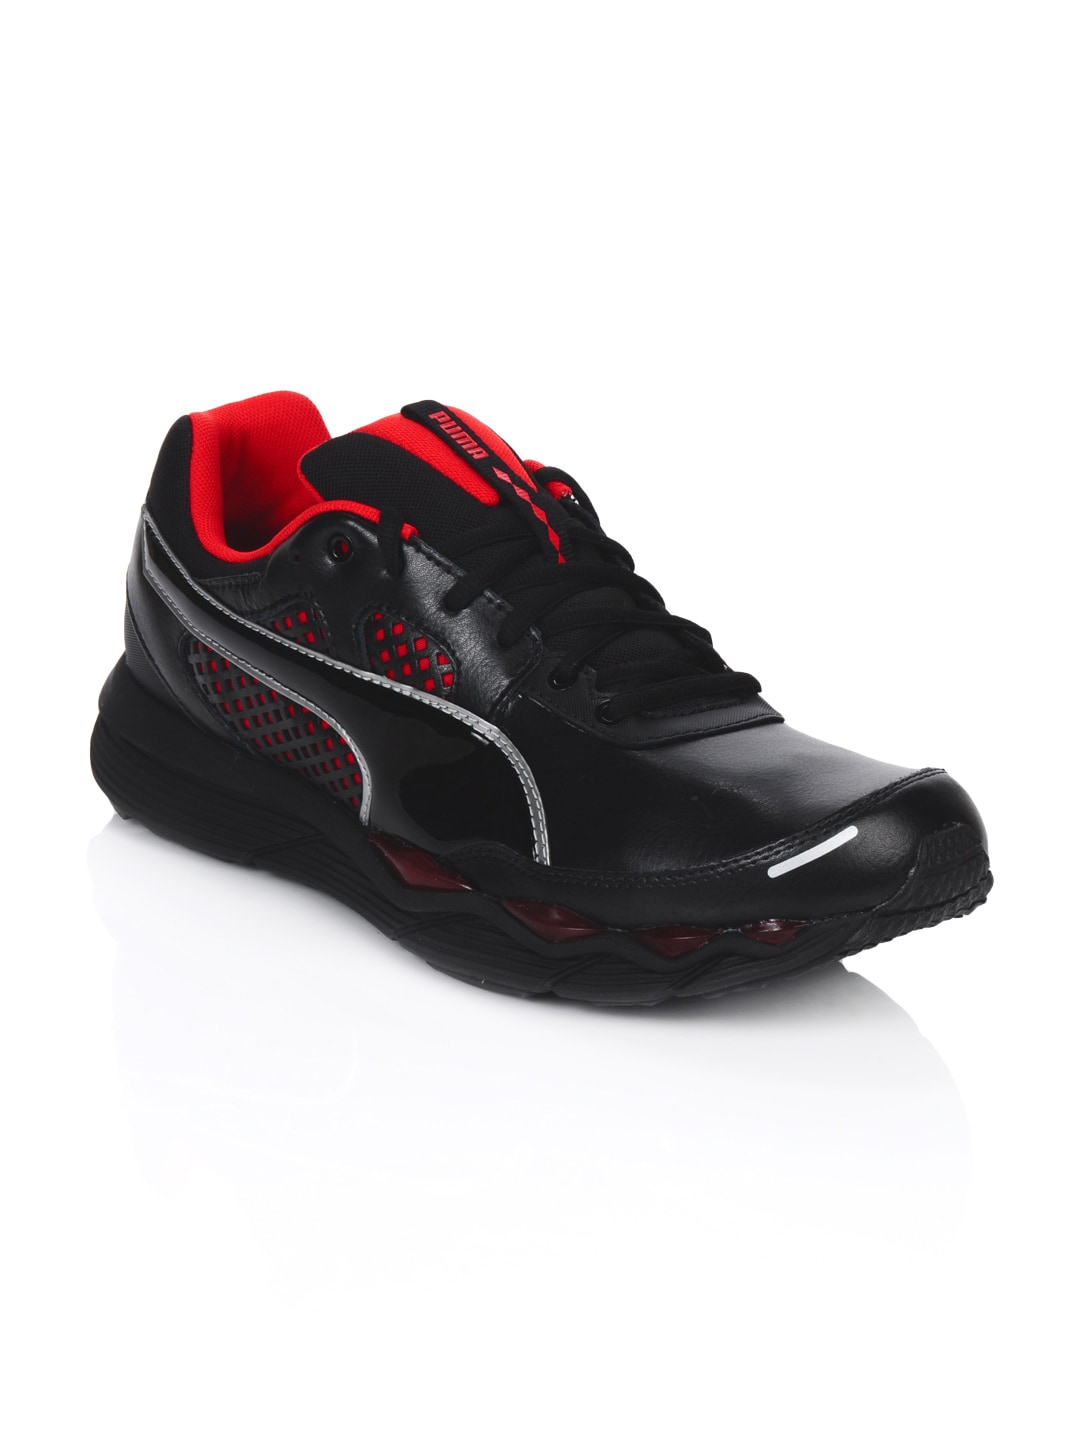 Puma Men Faas Steady Power Black Sports Shoes